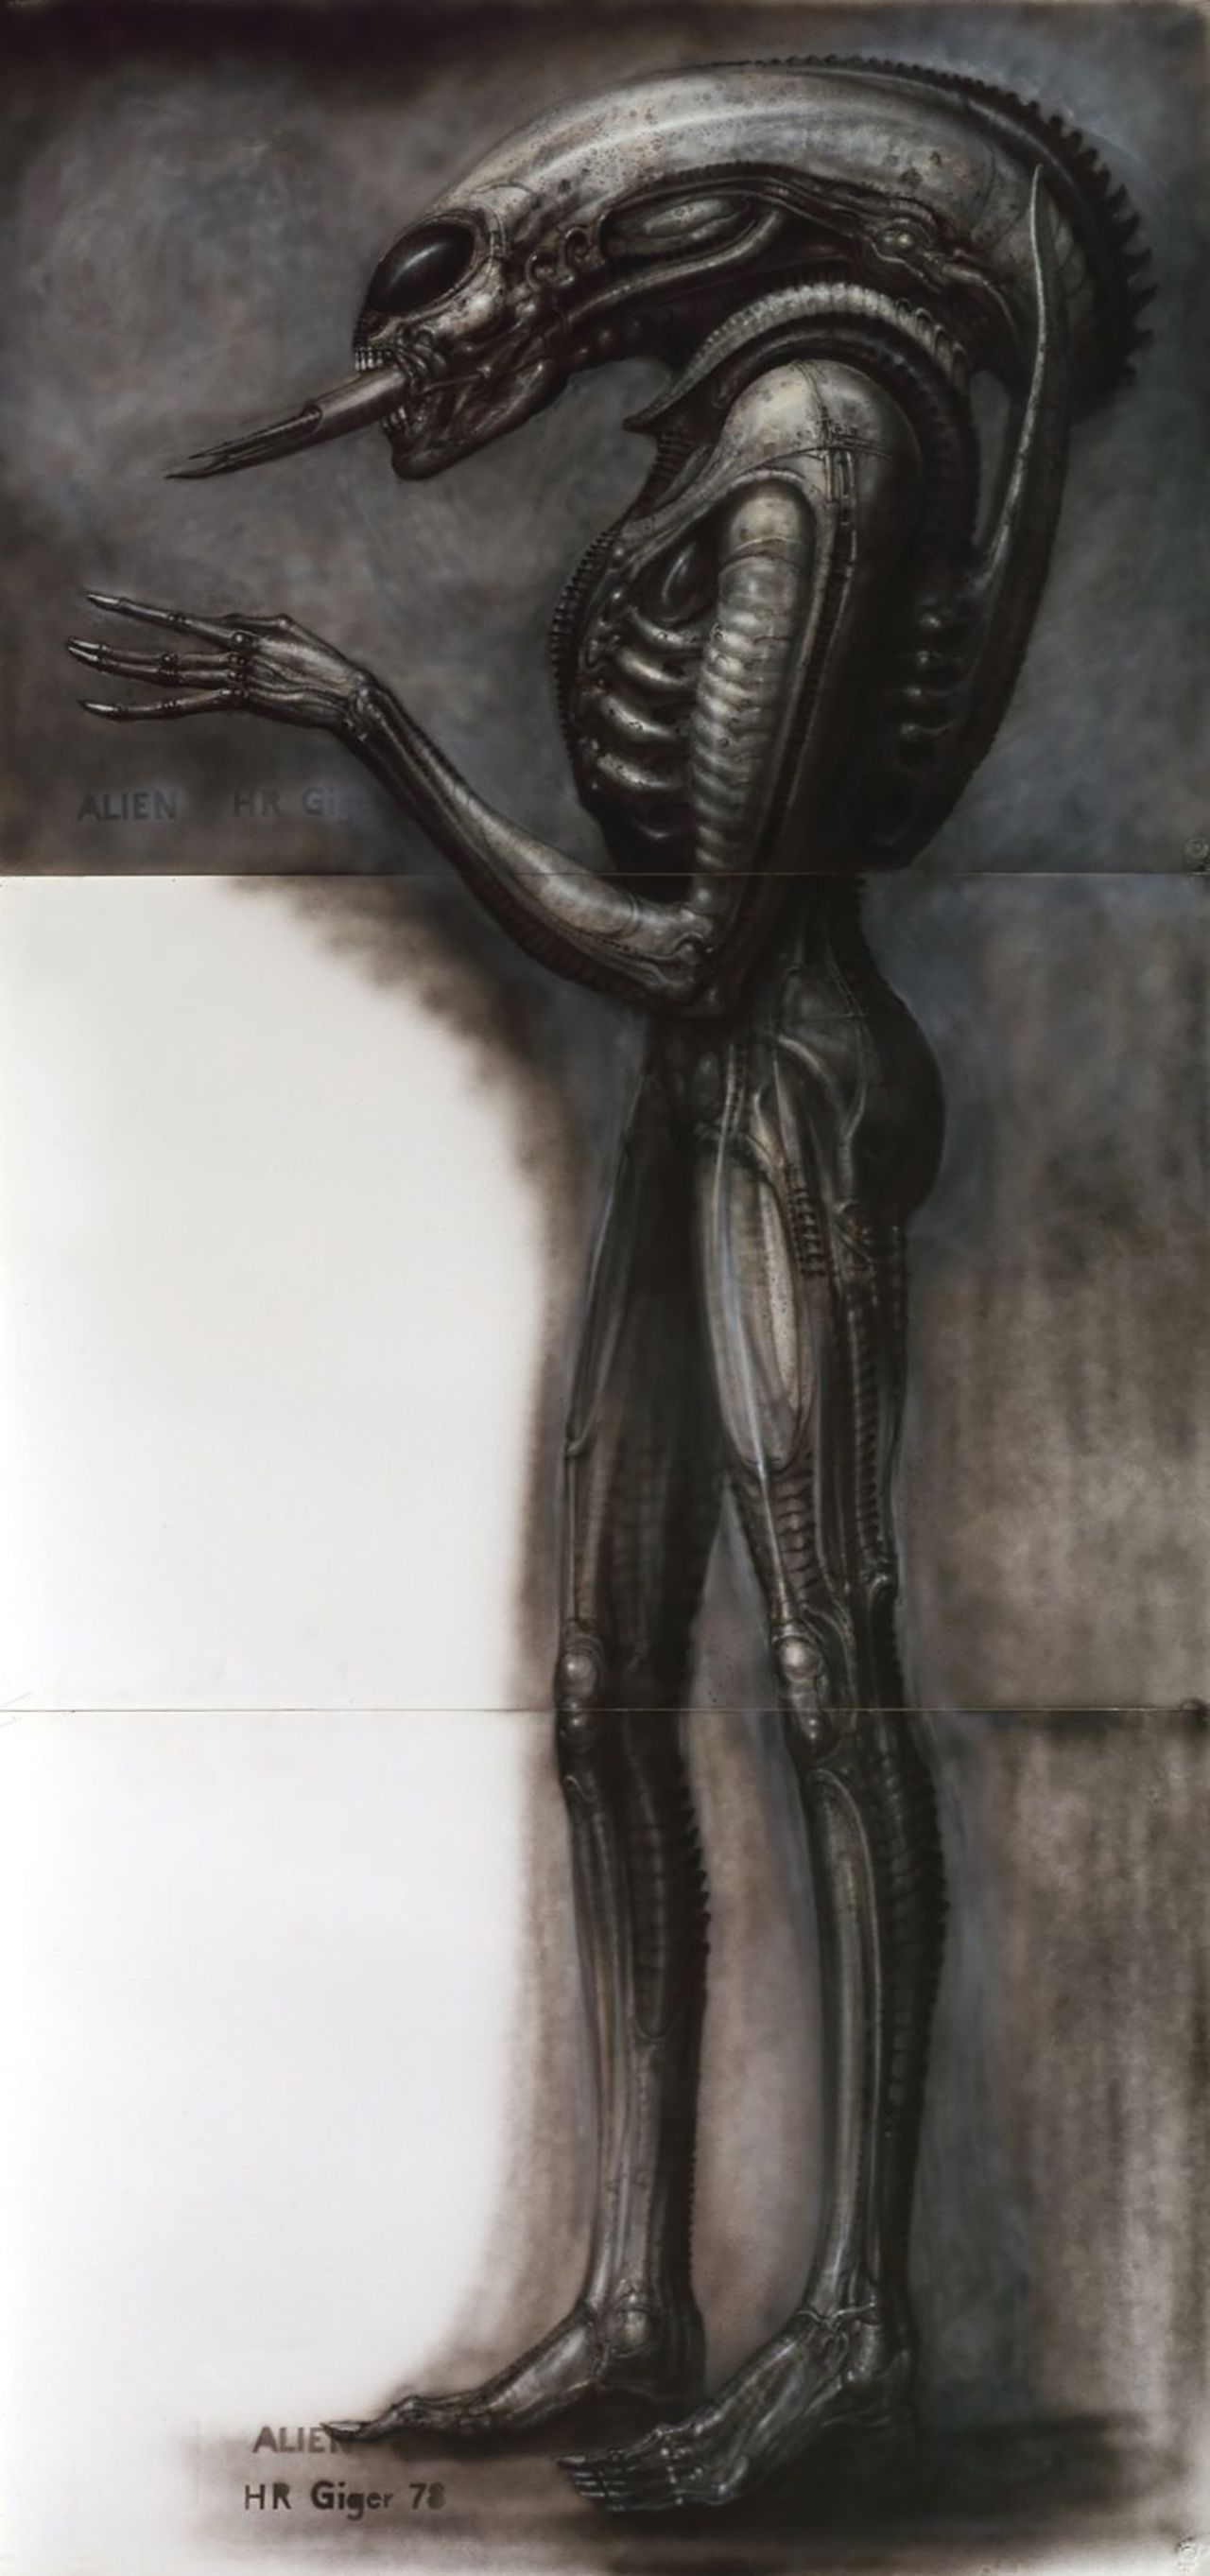 "Alien III" (1978) by H.R. Giger